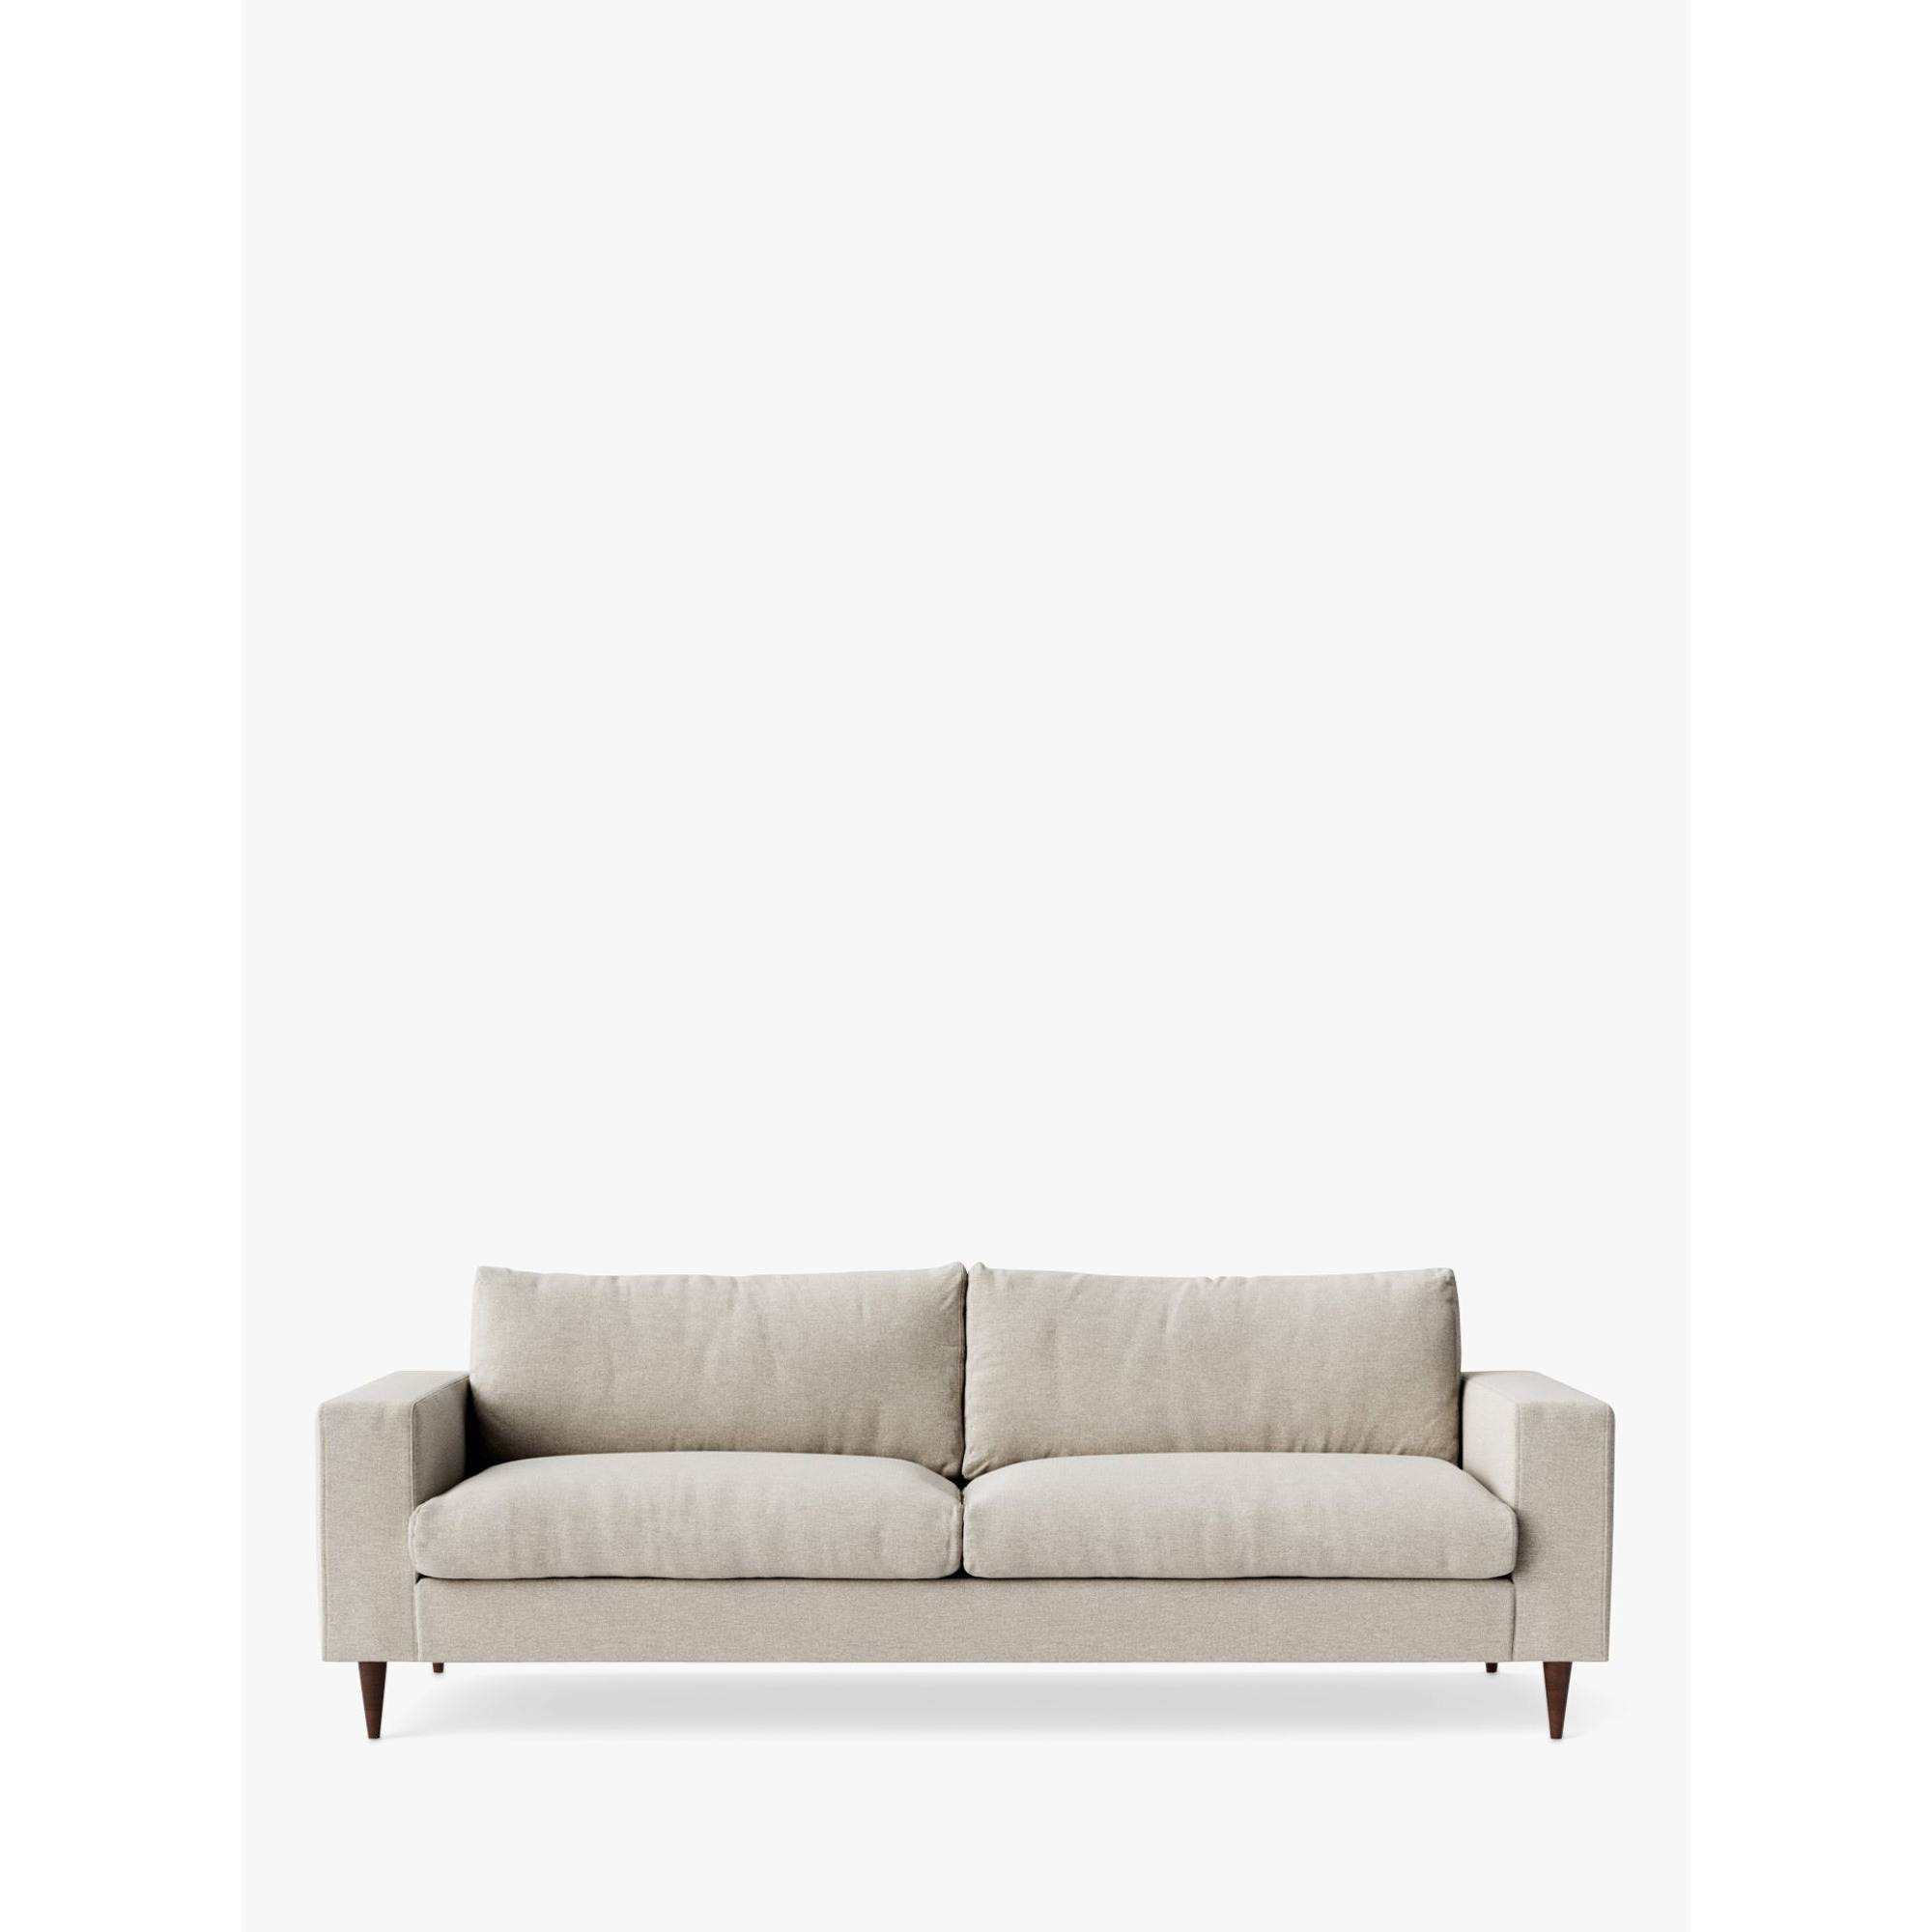 Swoon Evesham Large 3 Seater Sofa, Dark Leg - image 1